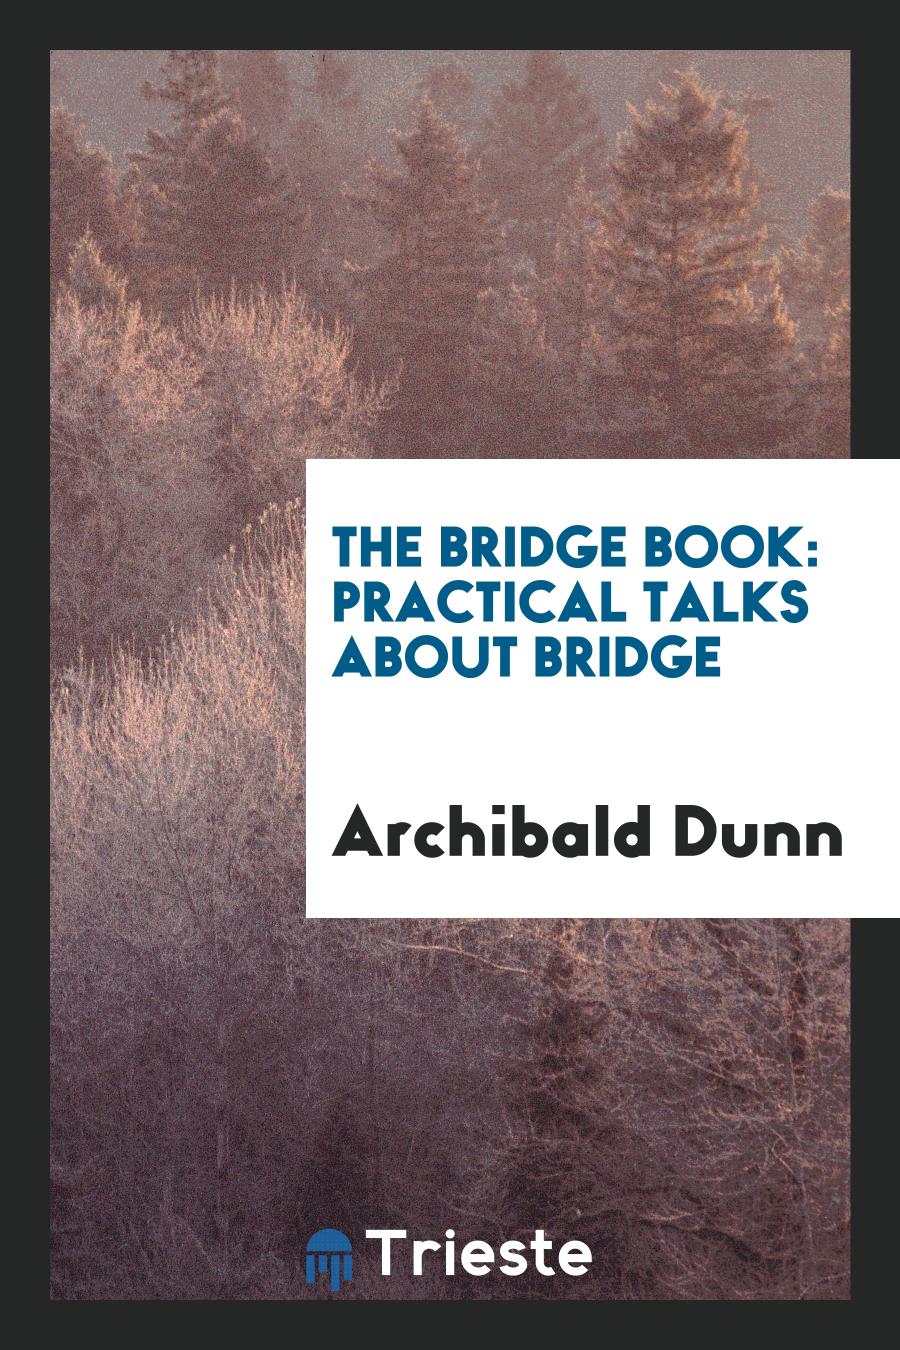 The bridge book: practical talks about bridge